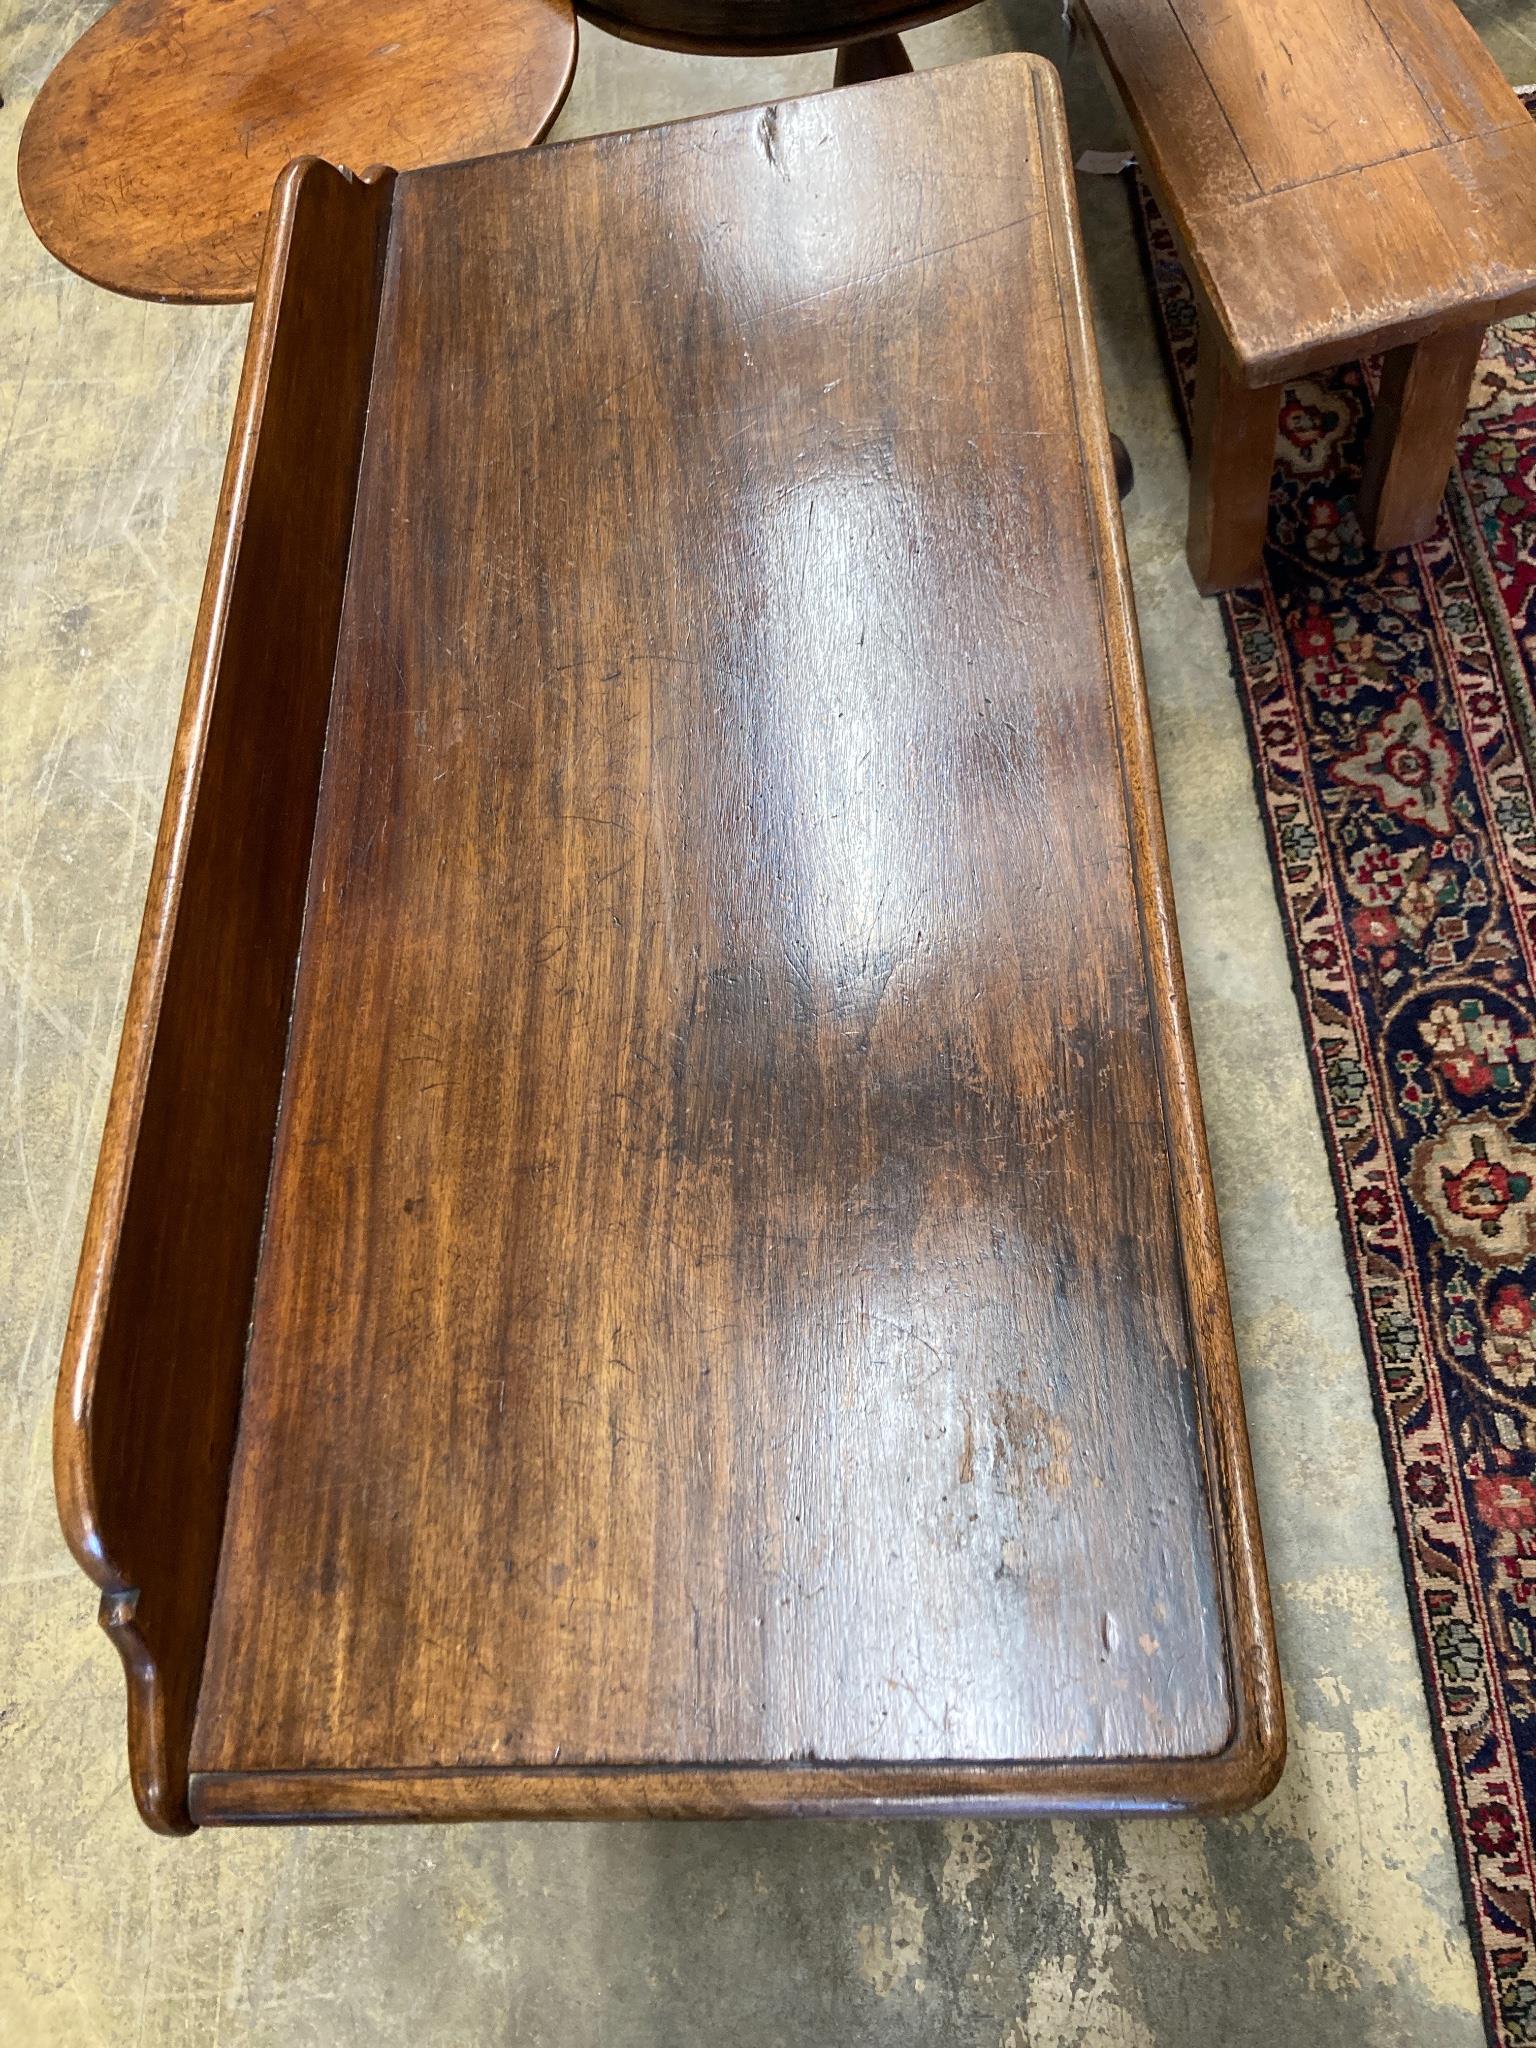 A Victorian mahogany writing table